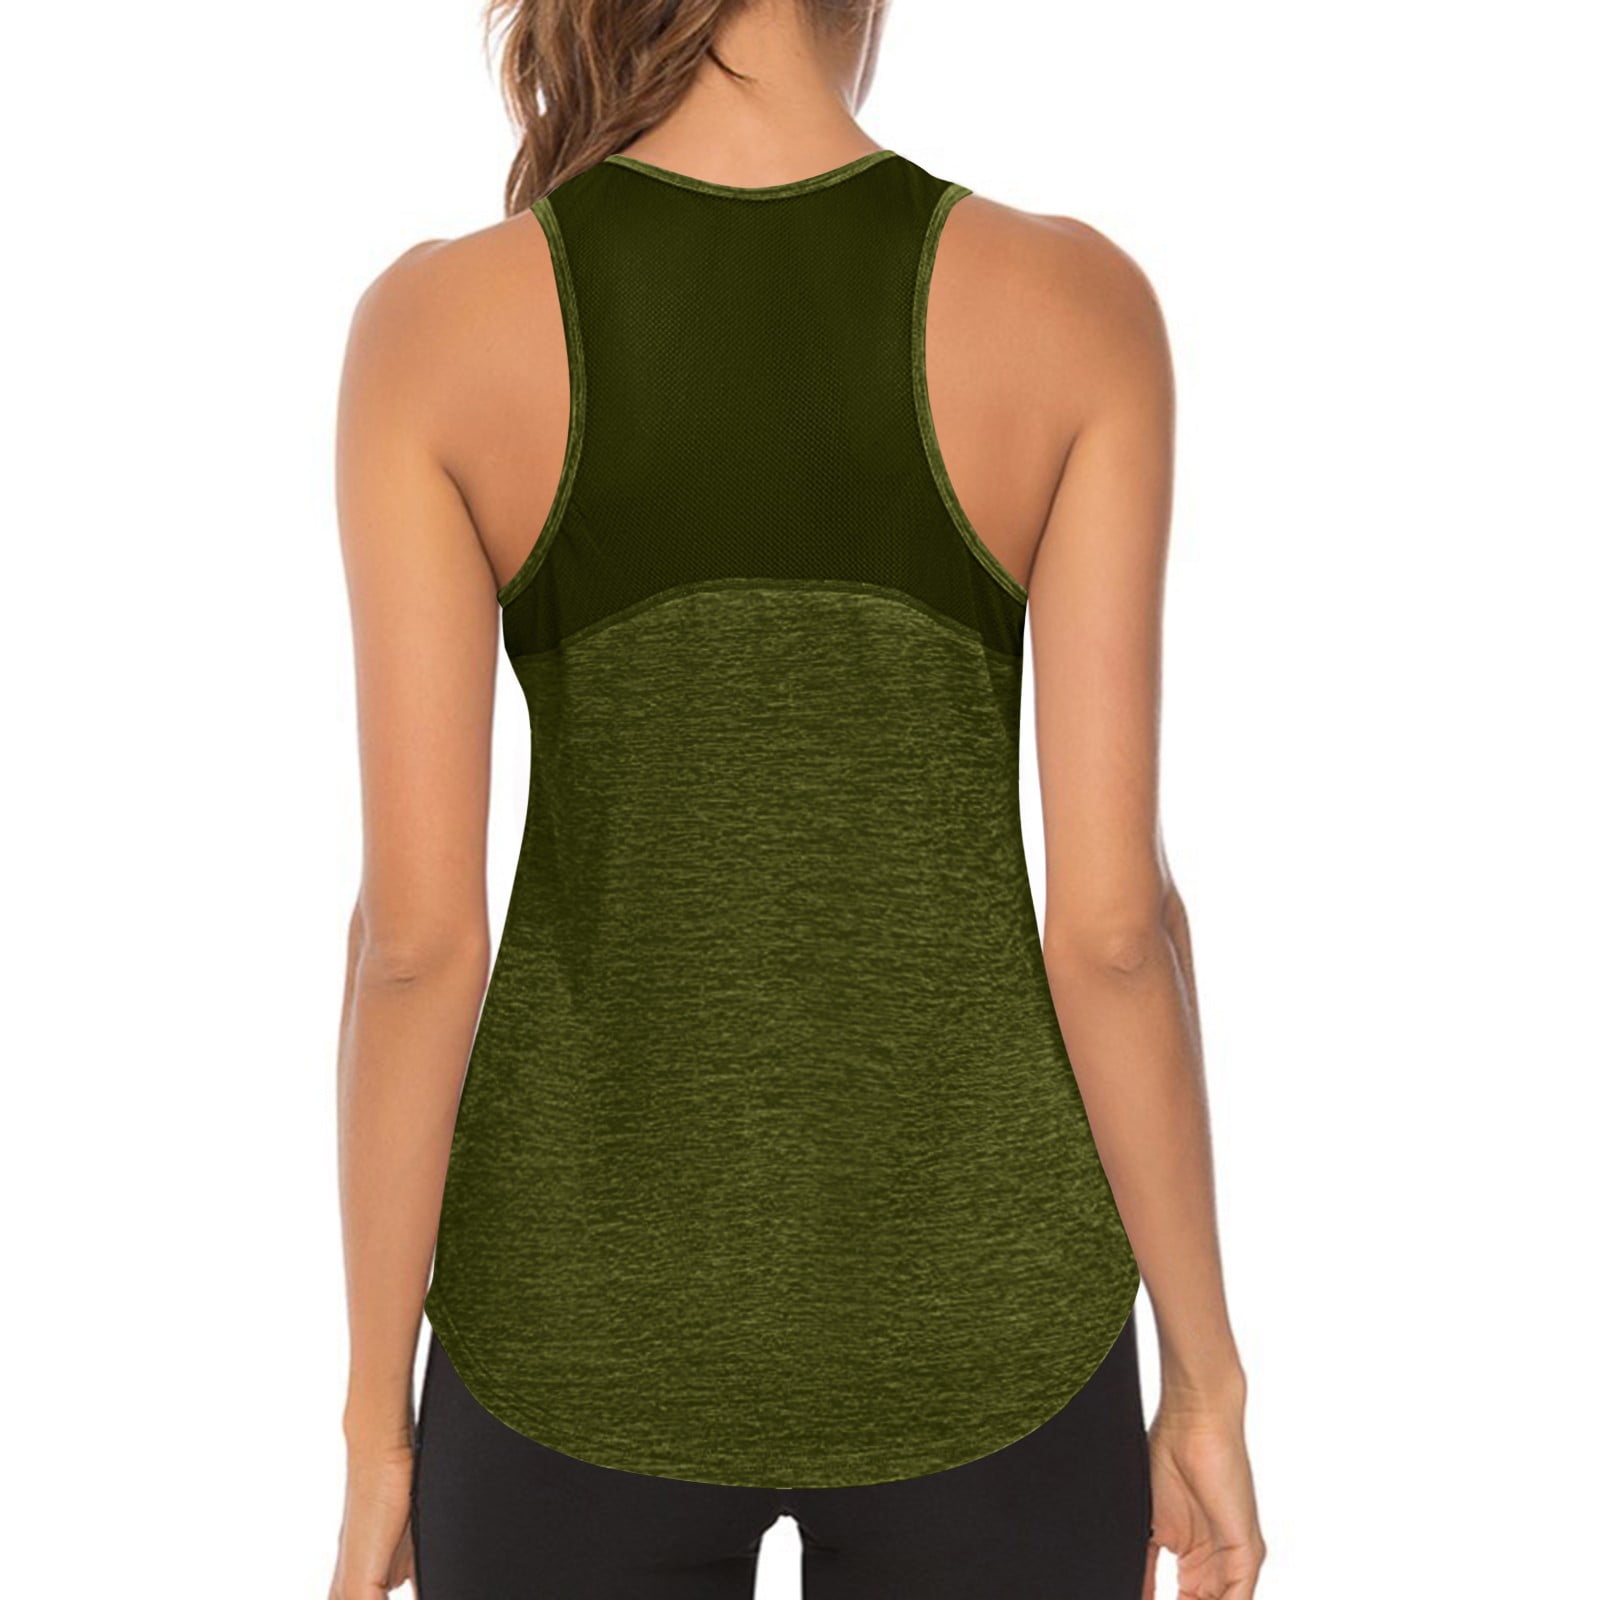 MRULIC tank top for women Women Workout Tops Sports Running Tank Mesh Yoga  Training Shirts Womens tank tops Army Green + S